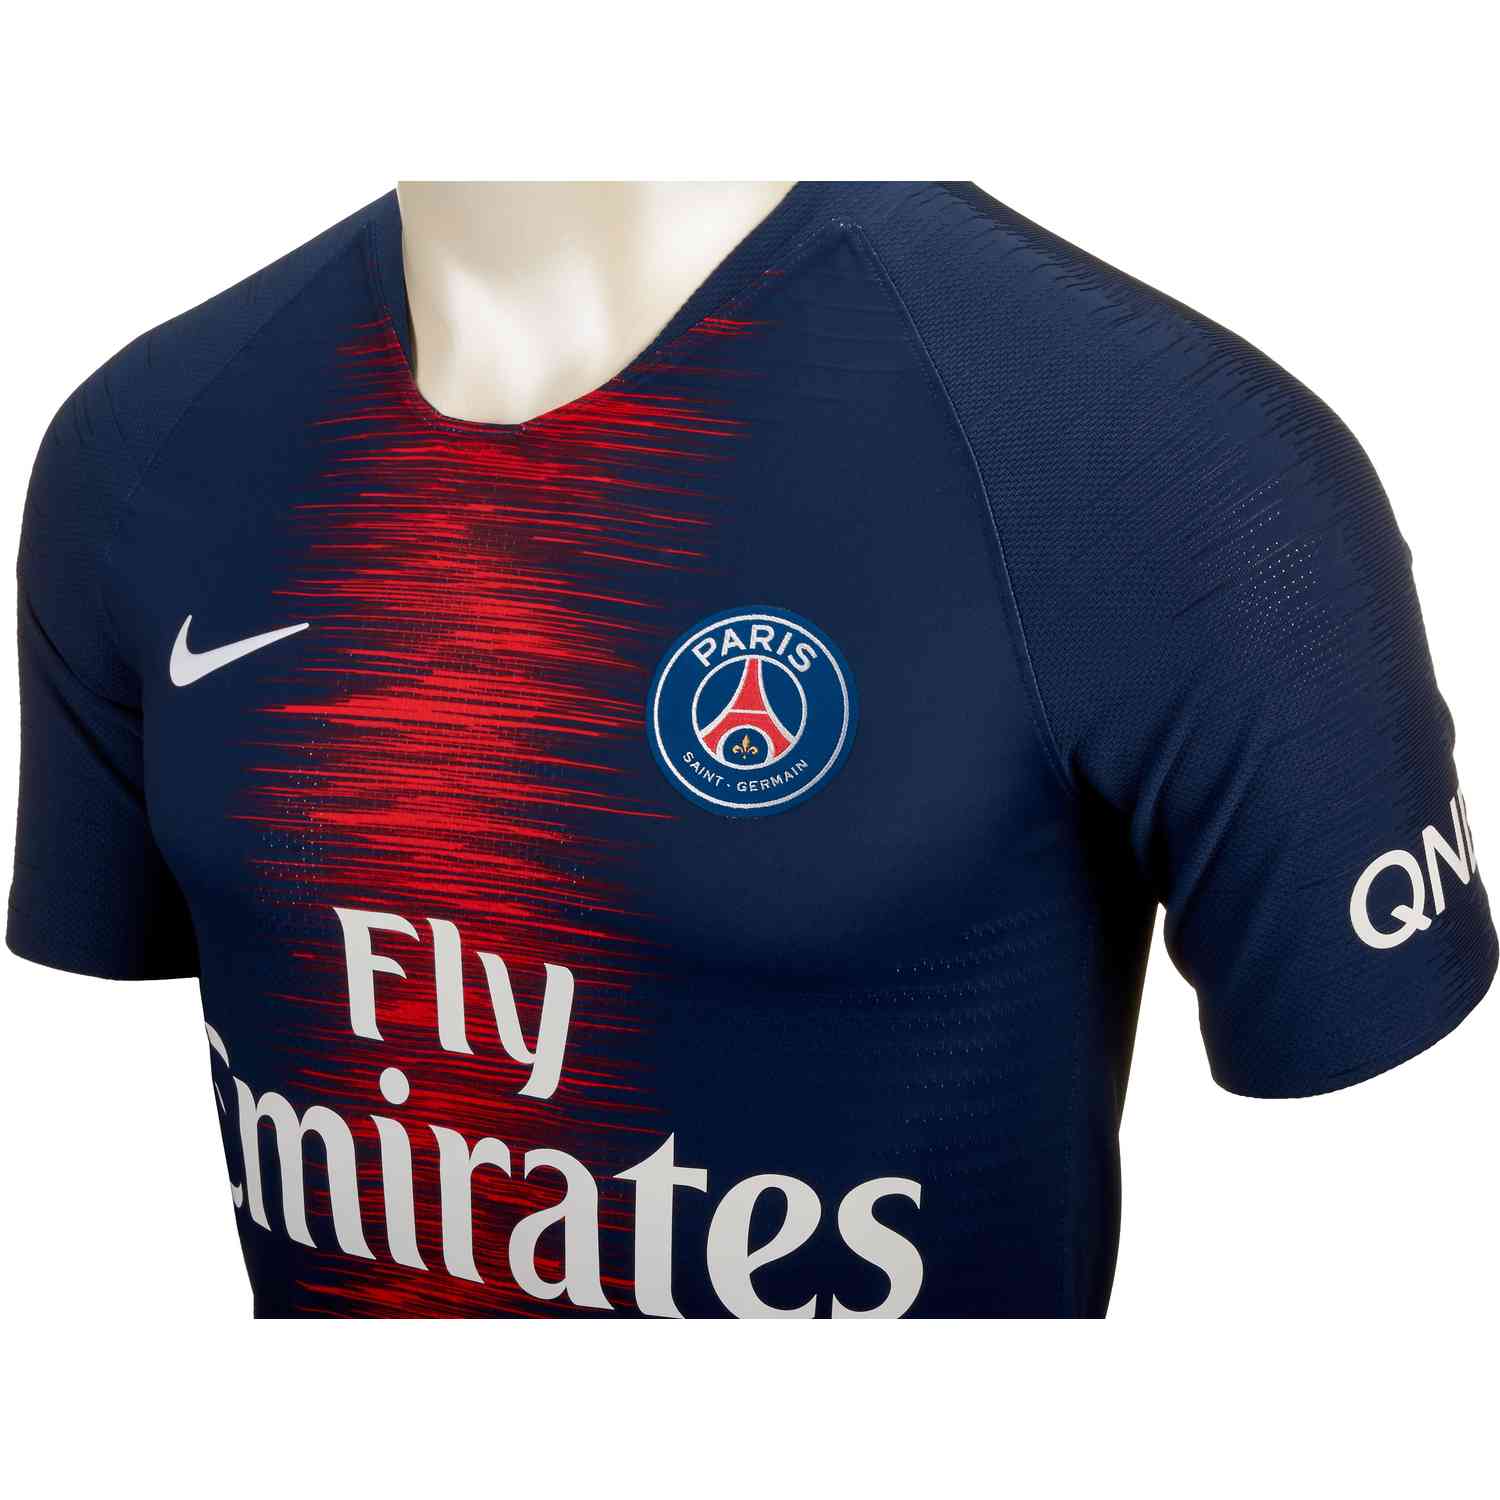 Paris Saint Germain PSG Nike VaporKnit 2018 Home Jersey Navy 894419-411  Mens XL